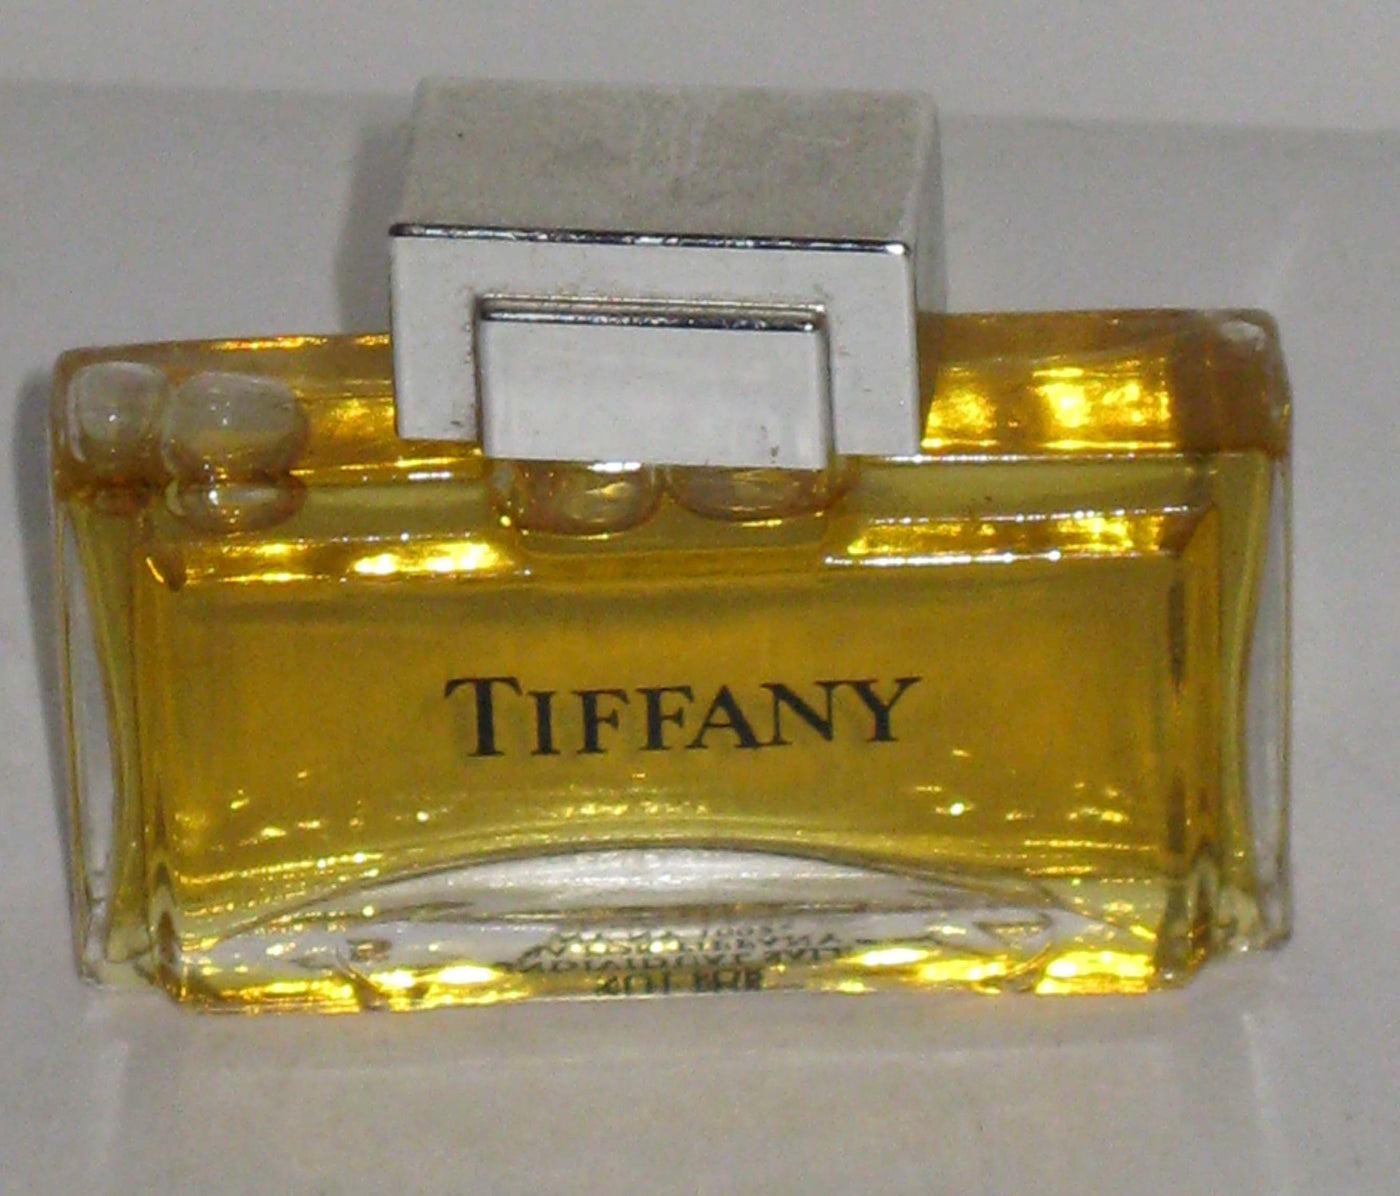 Tiffany Perfume Mini